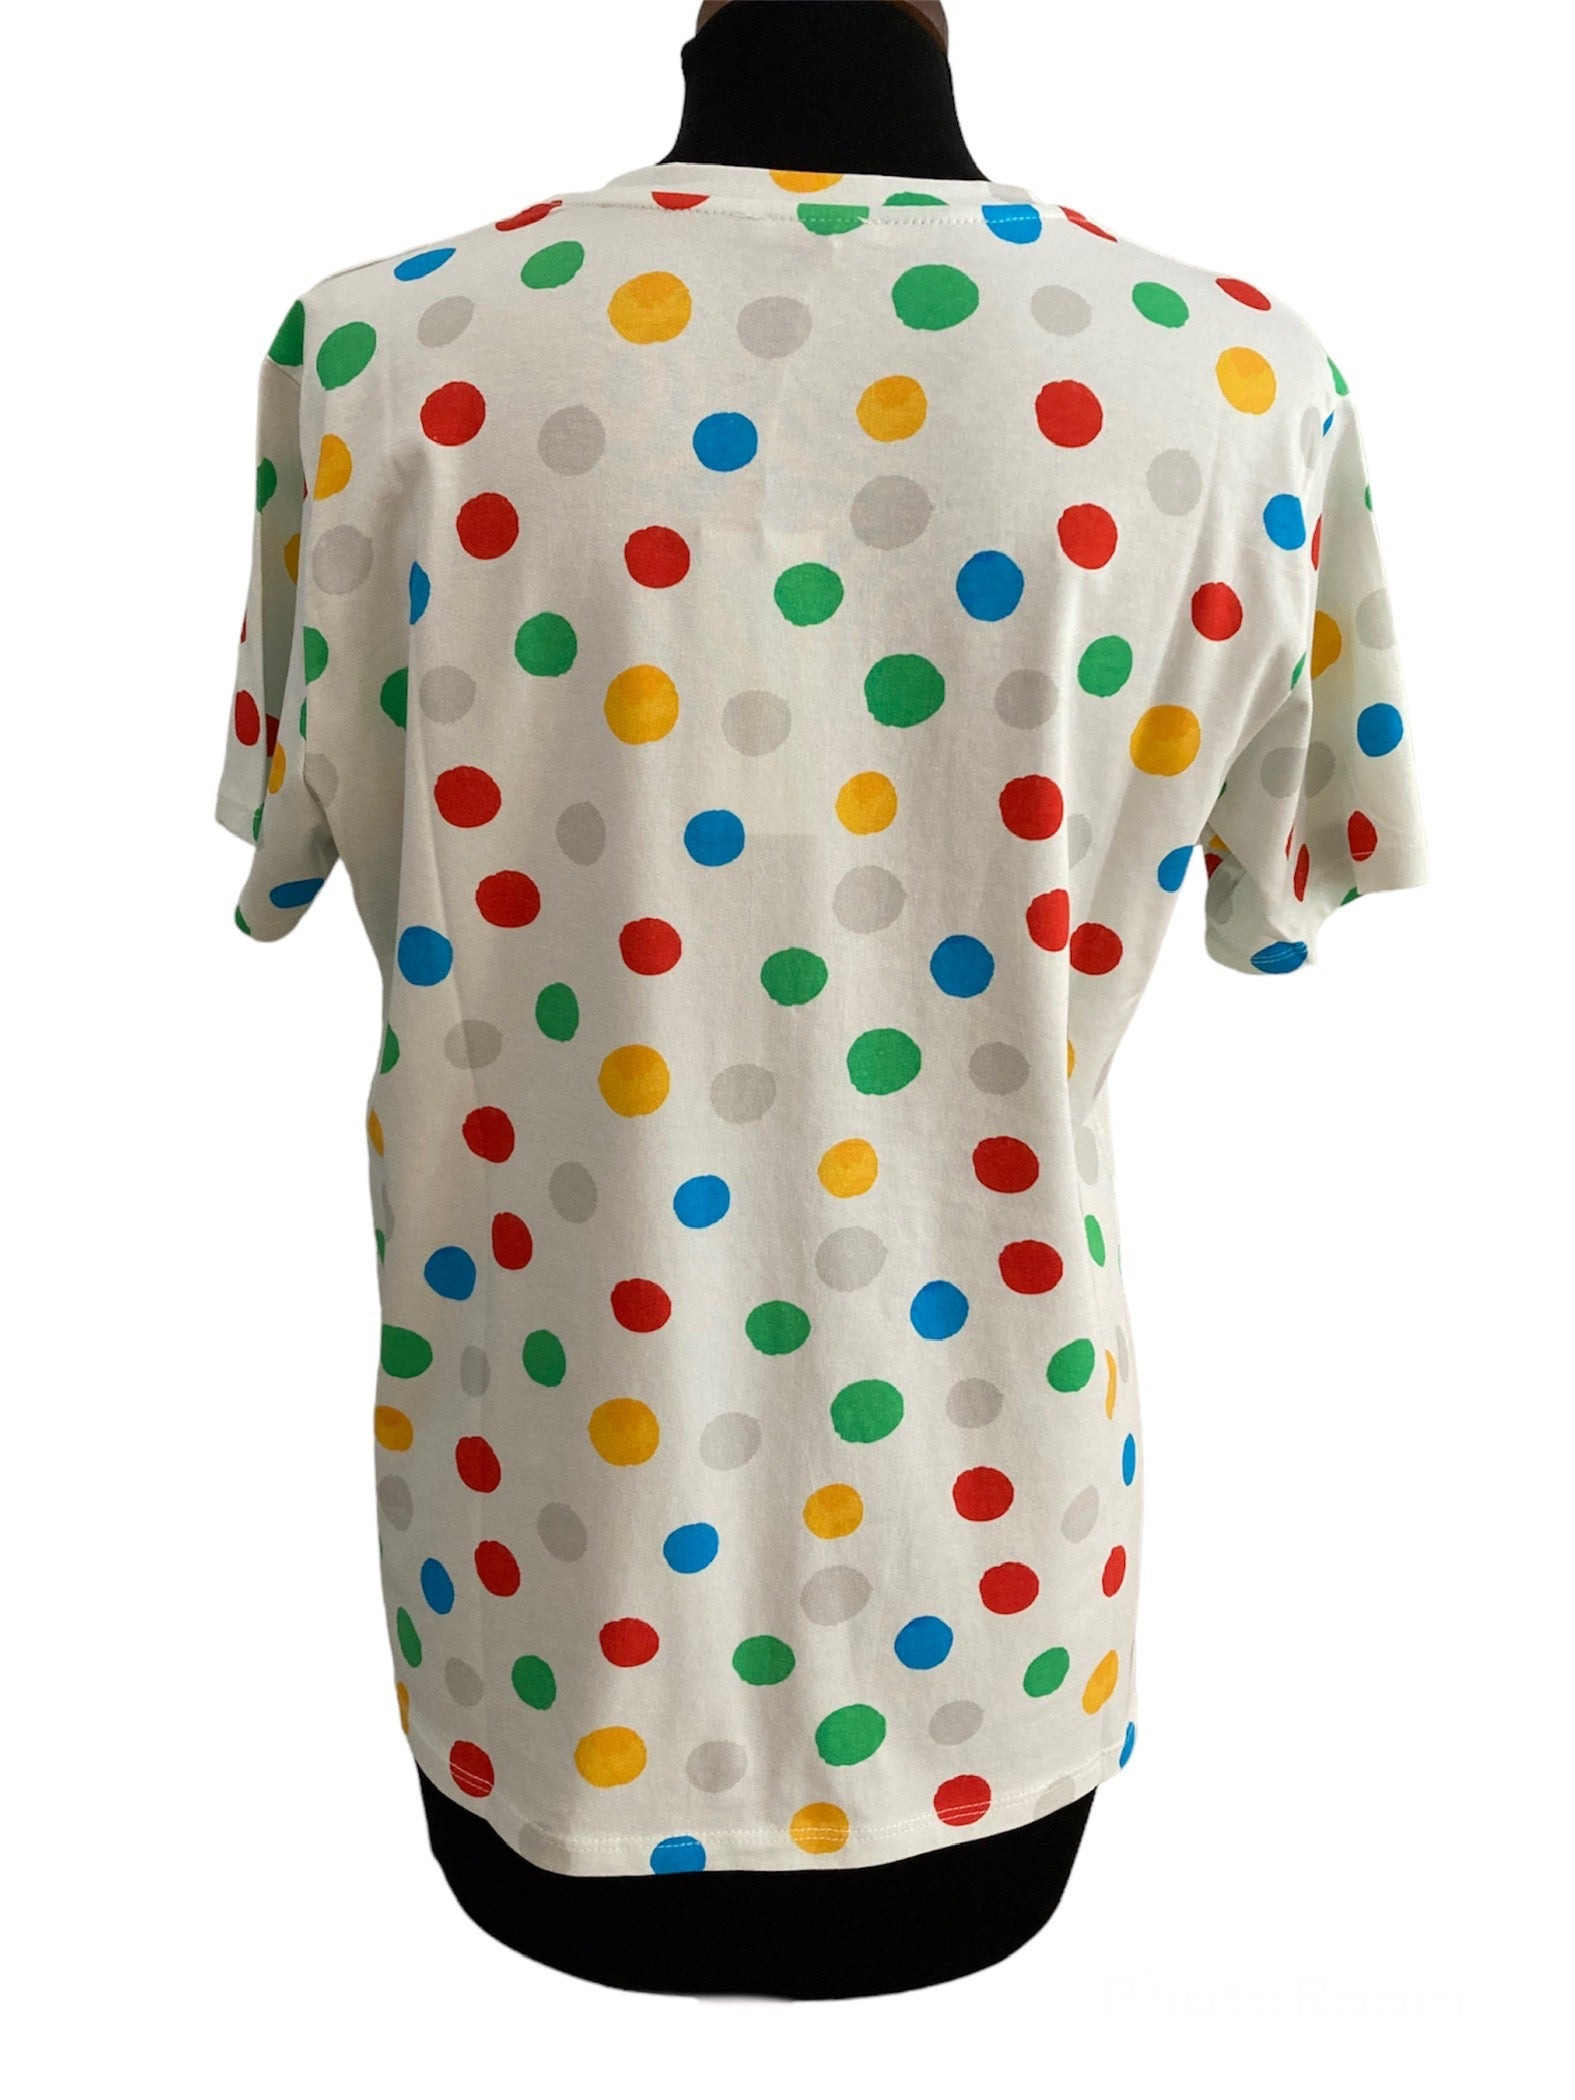 The Dots T-Shirt